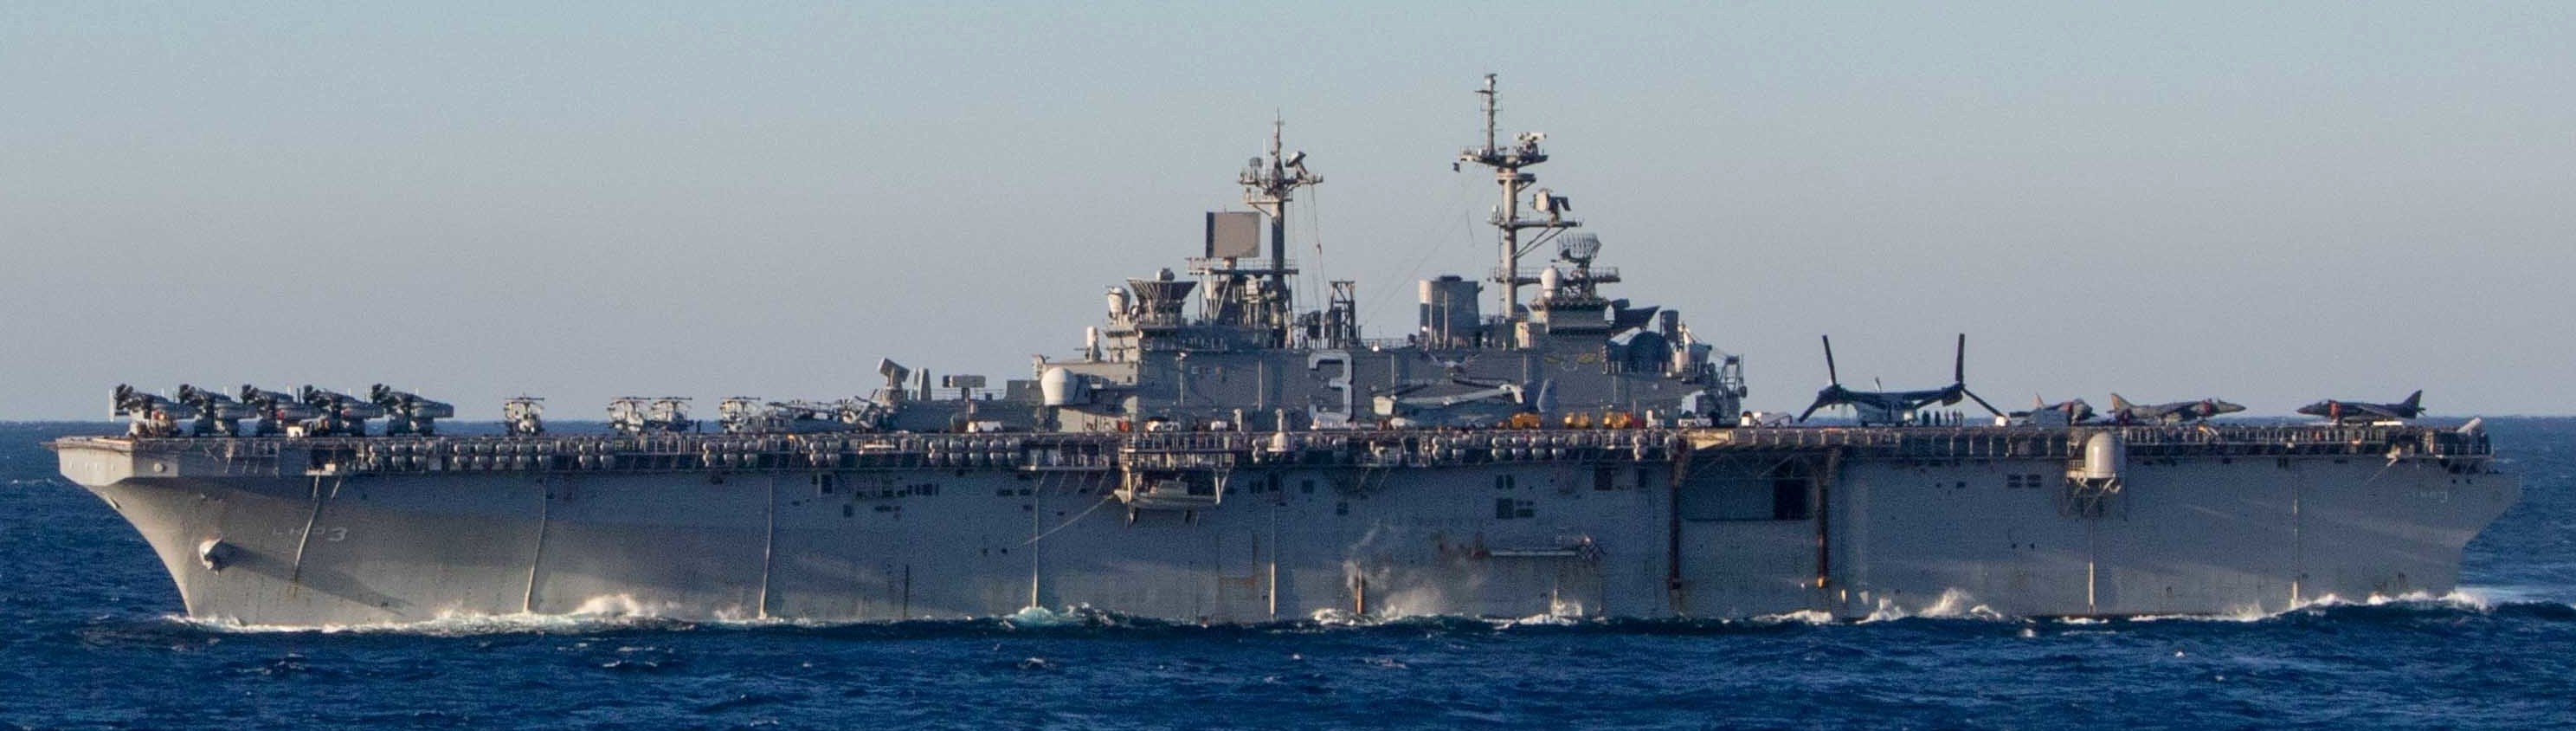 lhd-3 uss kearsarge wasp class amphibious assault ship us navy marines vmm-263 220